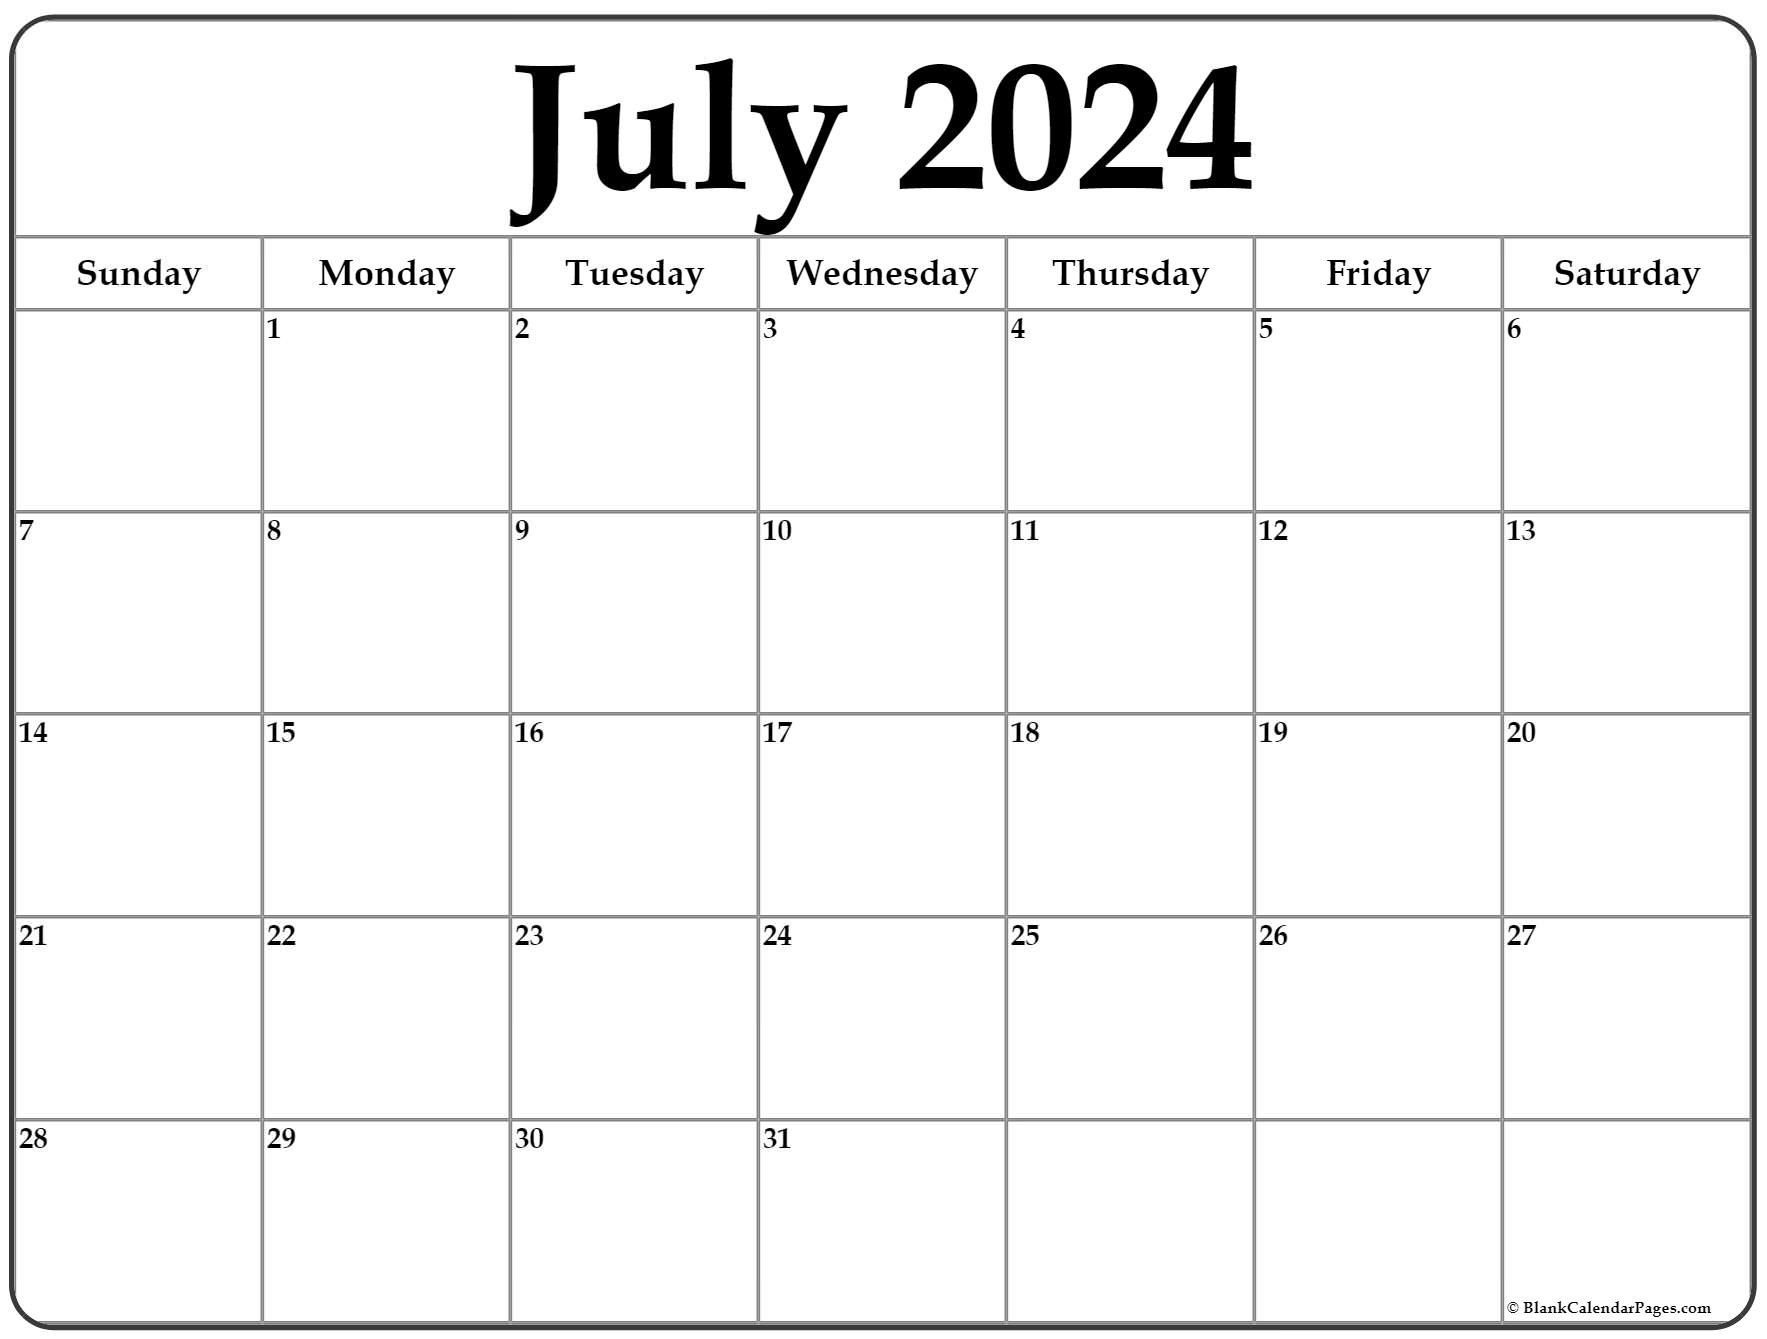 July 2024 Calendar | Free Printable Calendar pertaining to Calendar Page July 2024